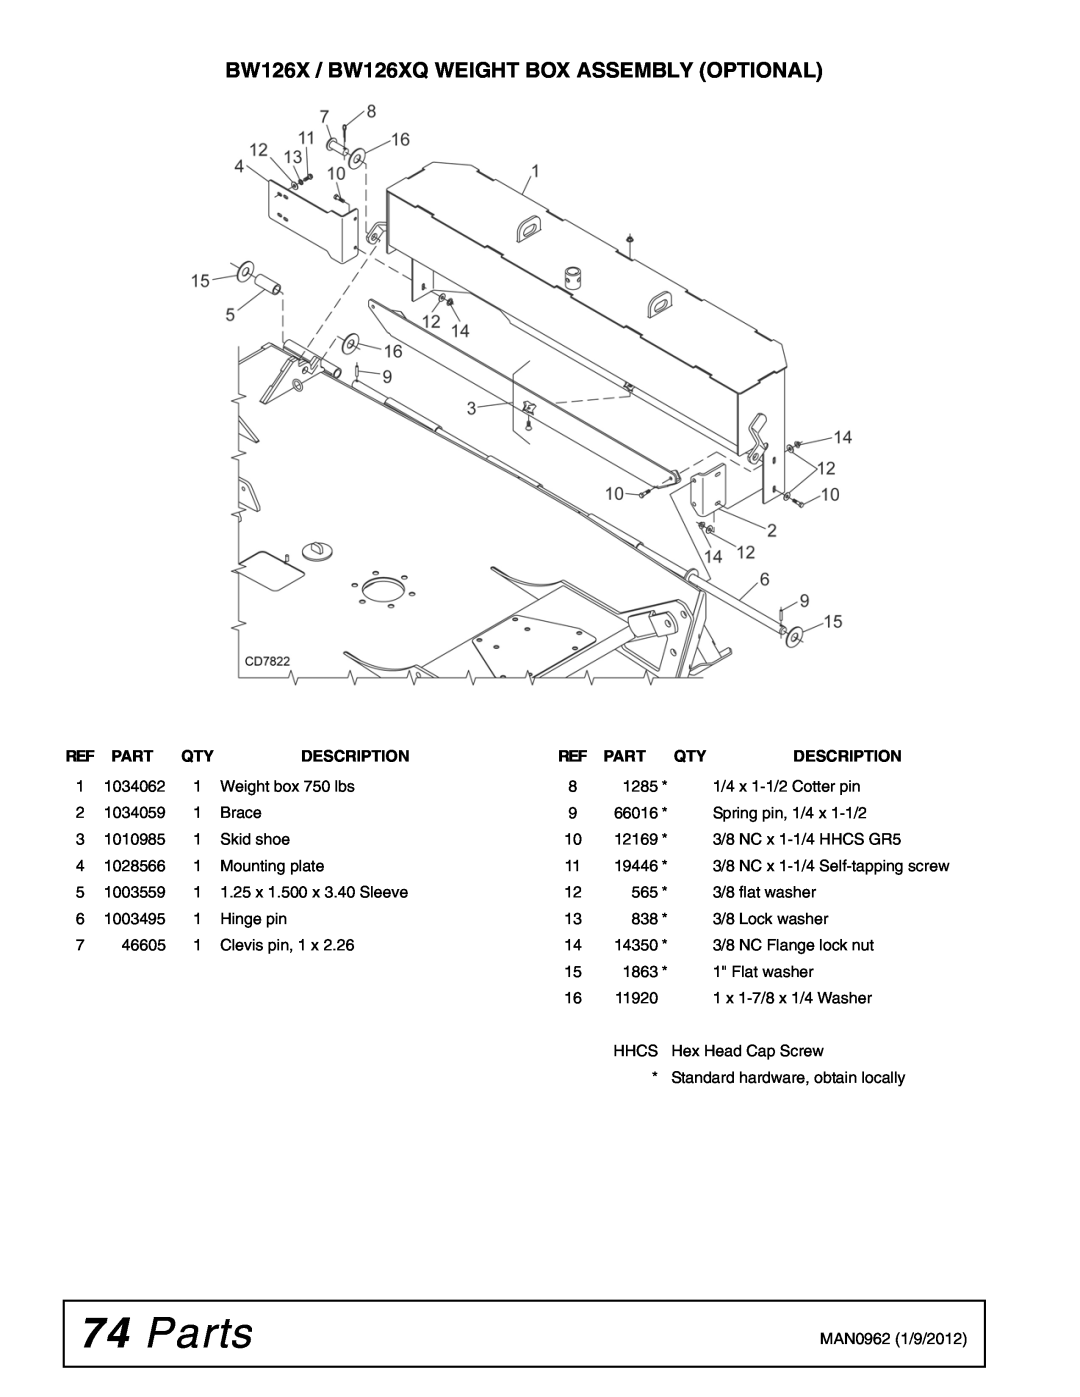 Woods Equipment BW180XQ manual Parts, BW126X / BW126XQ WEIGHT BOX ASSEMBLY OPTIONAL, Description 